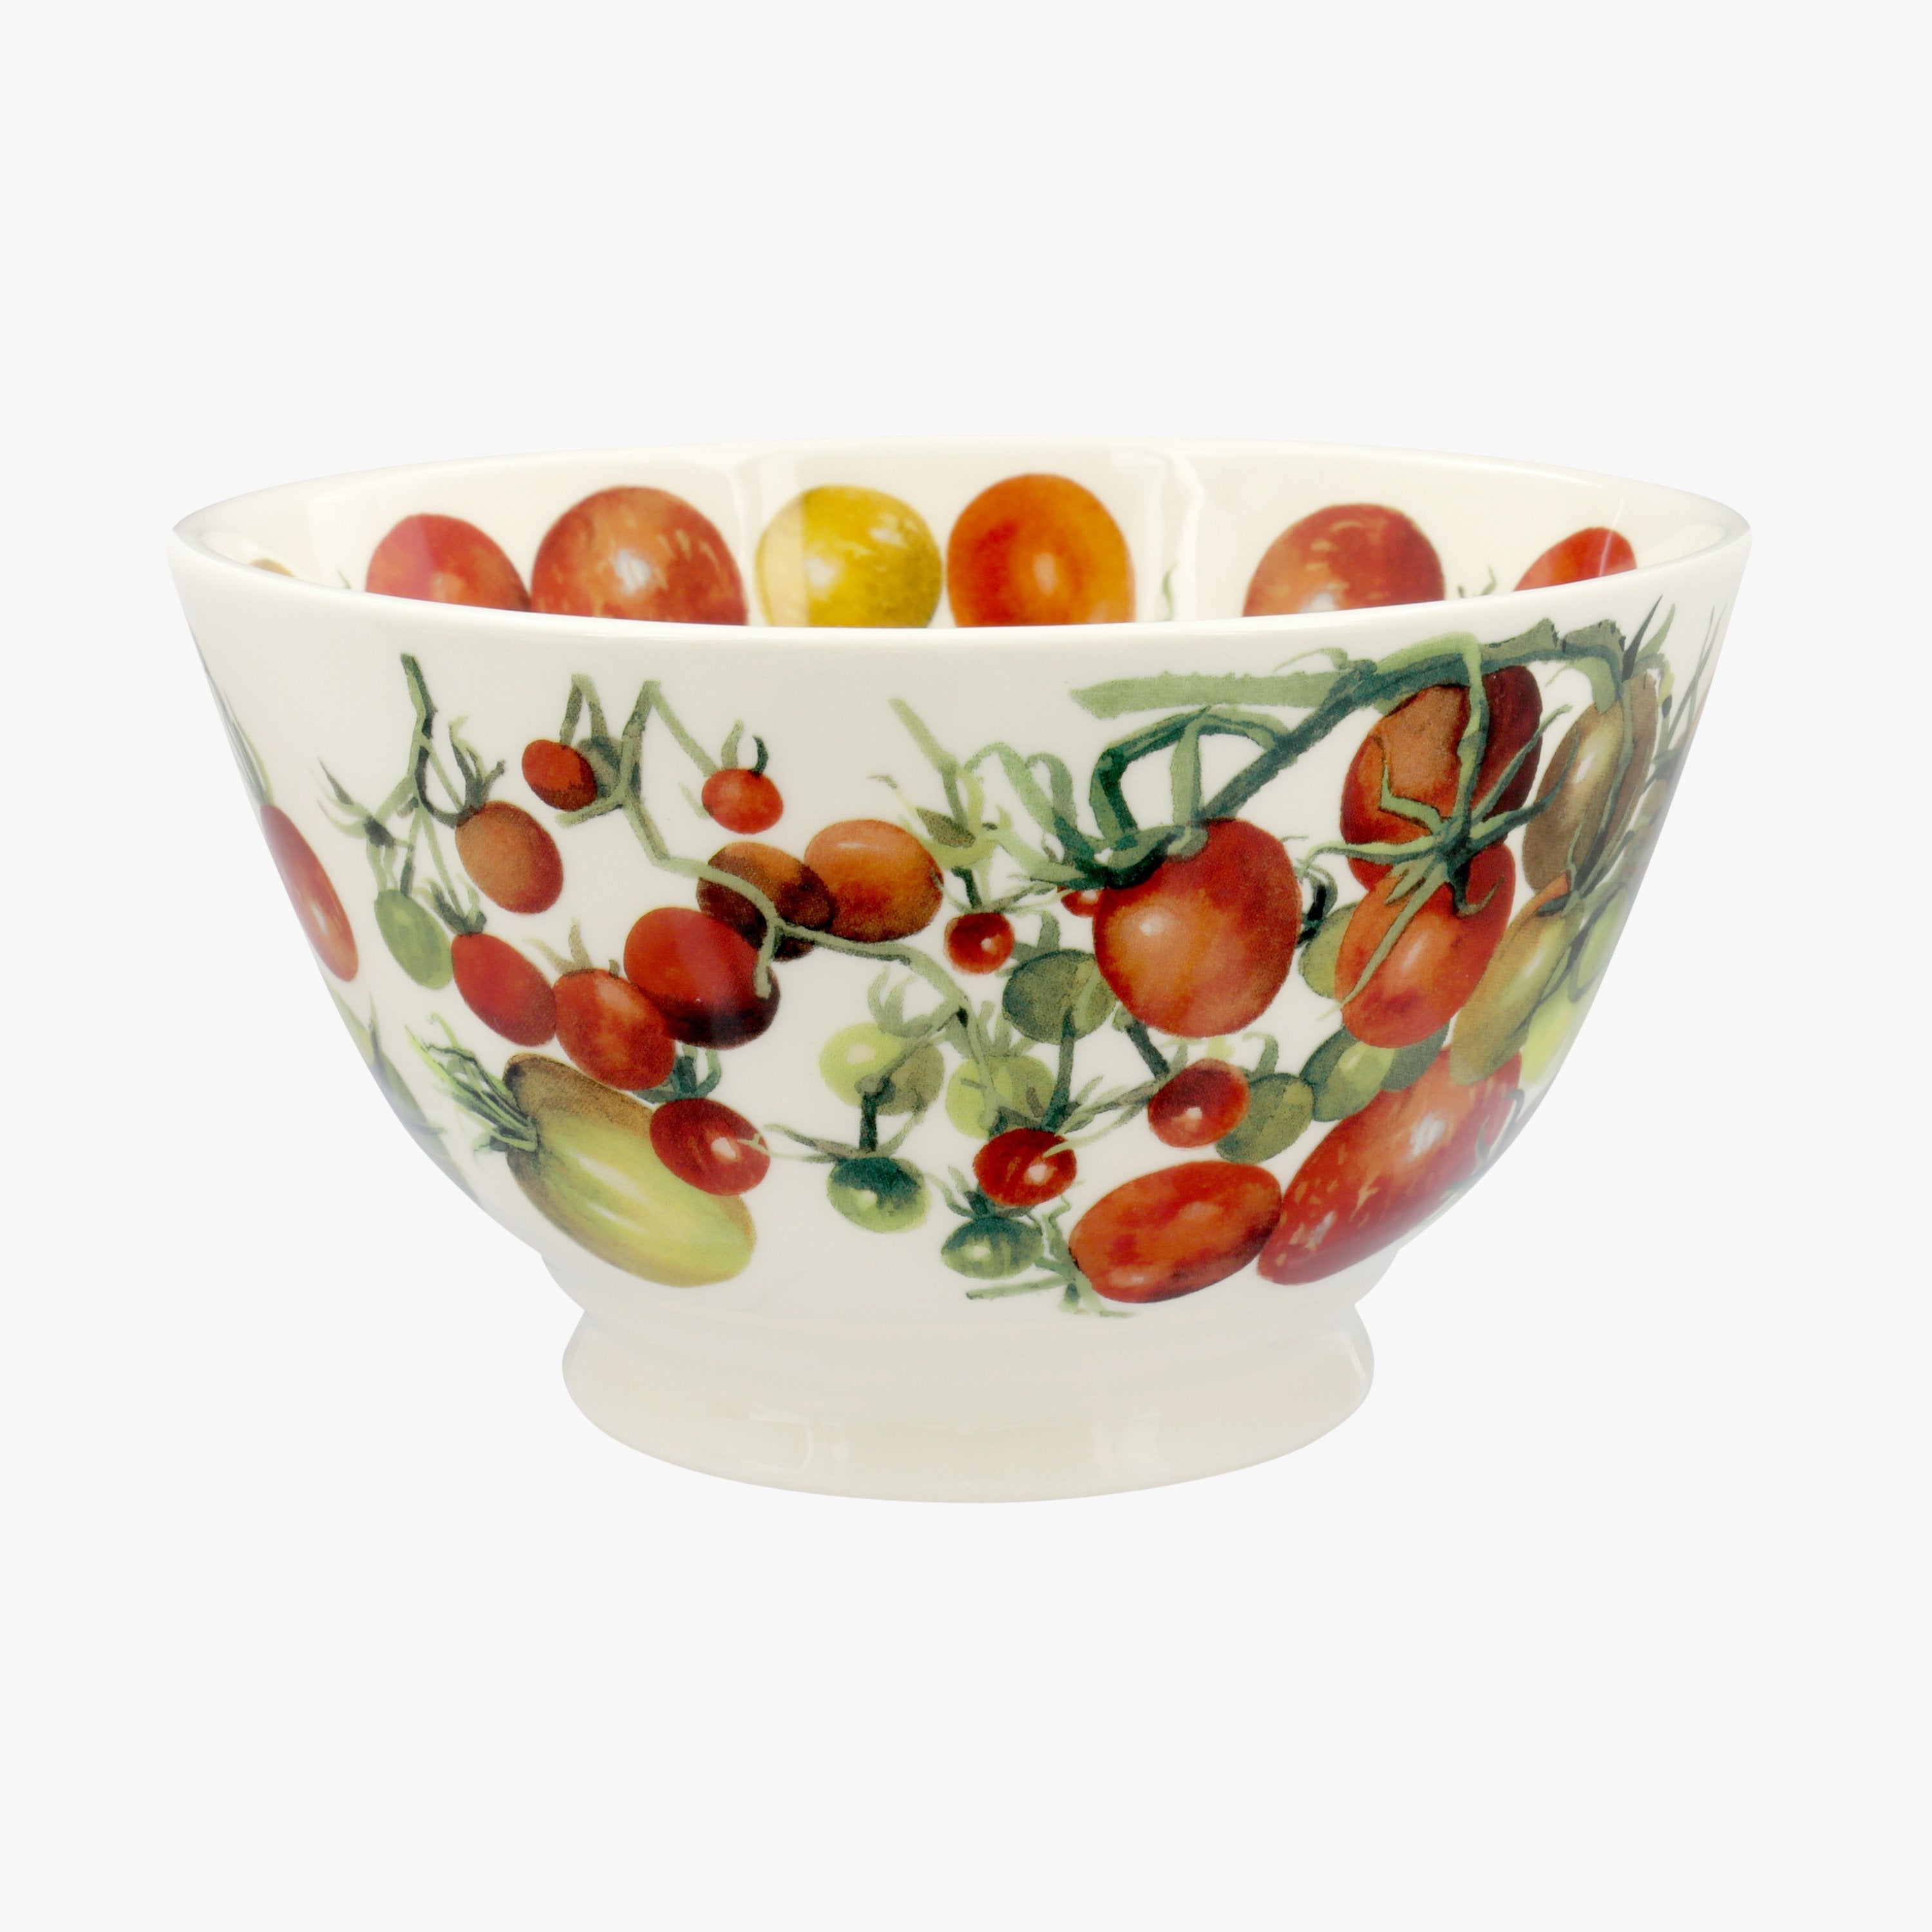 Seconds Tomatoes Medium Old Bowl - Unique Handmade & Handpainted English Earthenware Decorative Plat